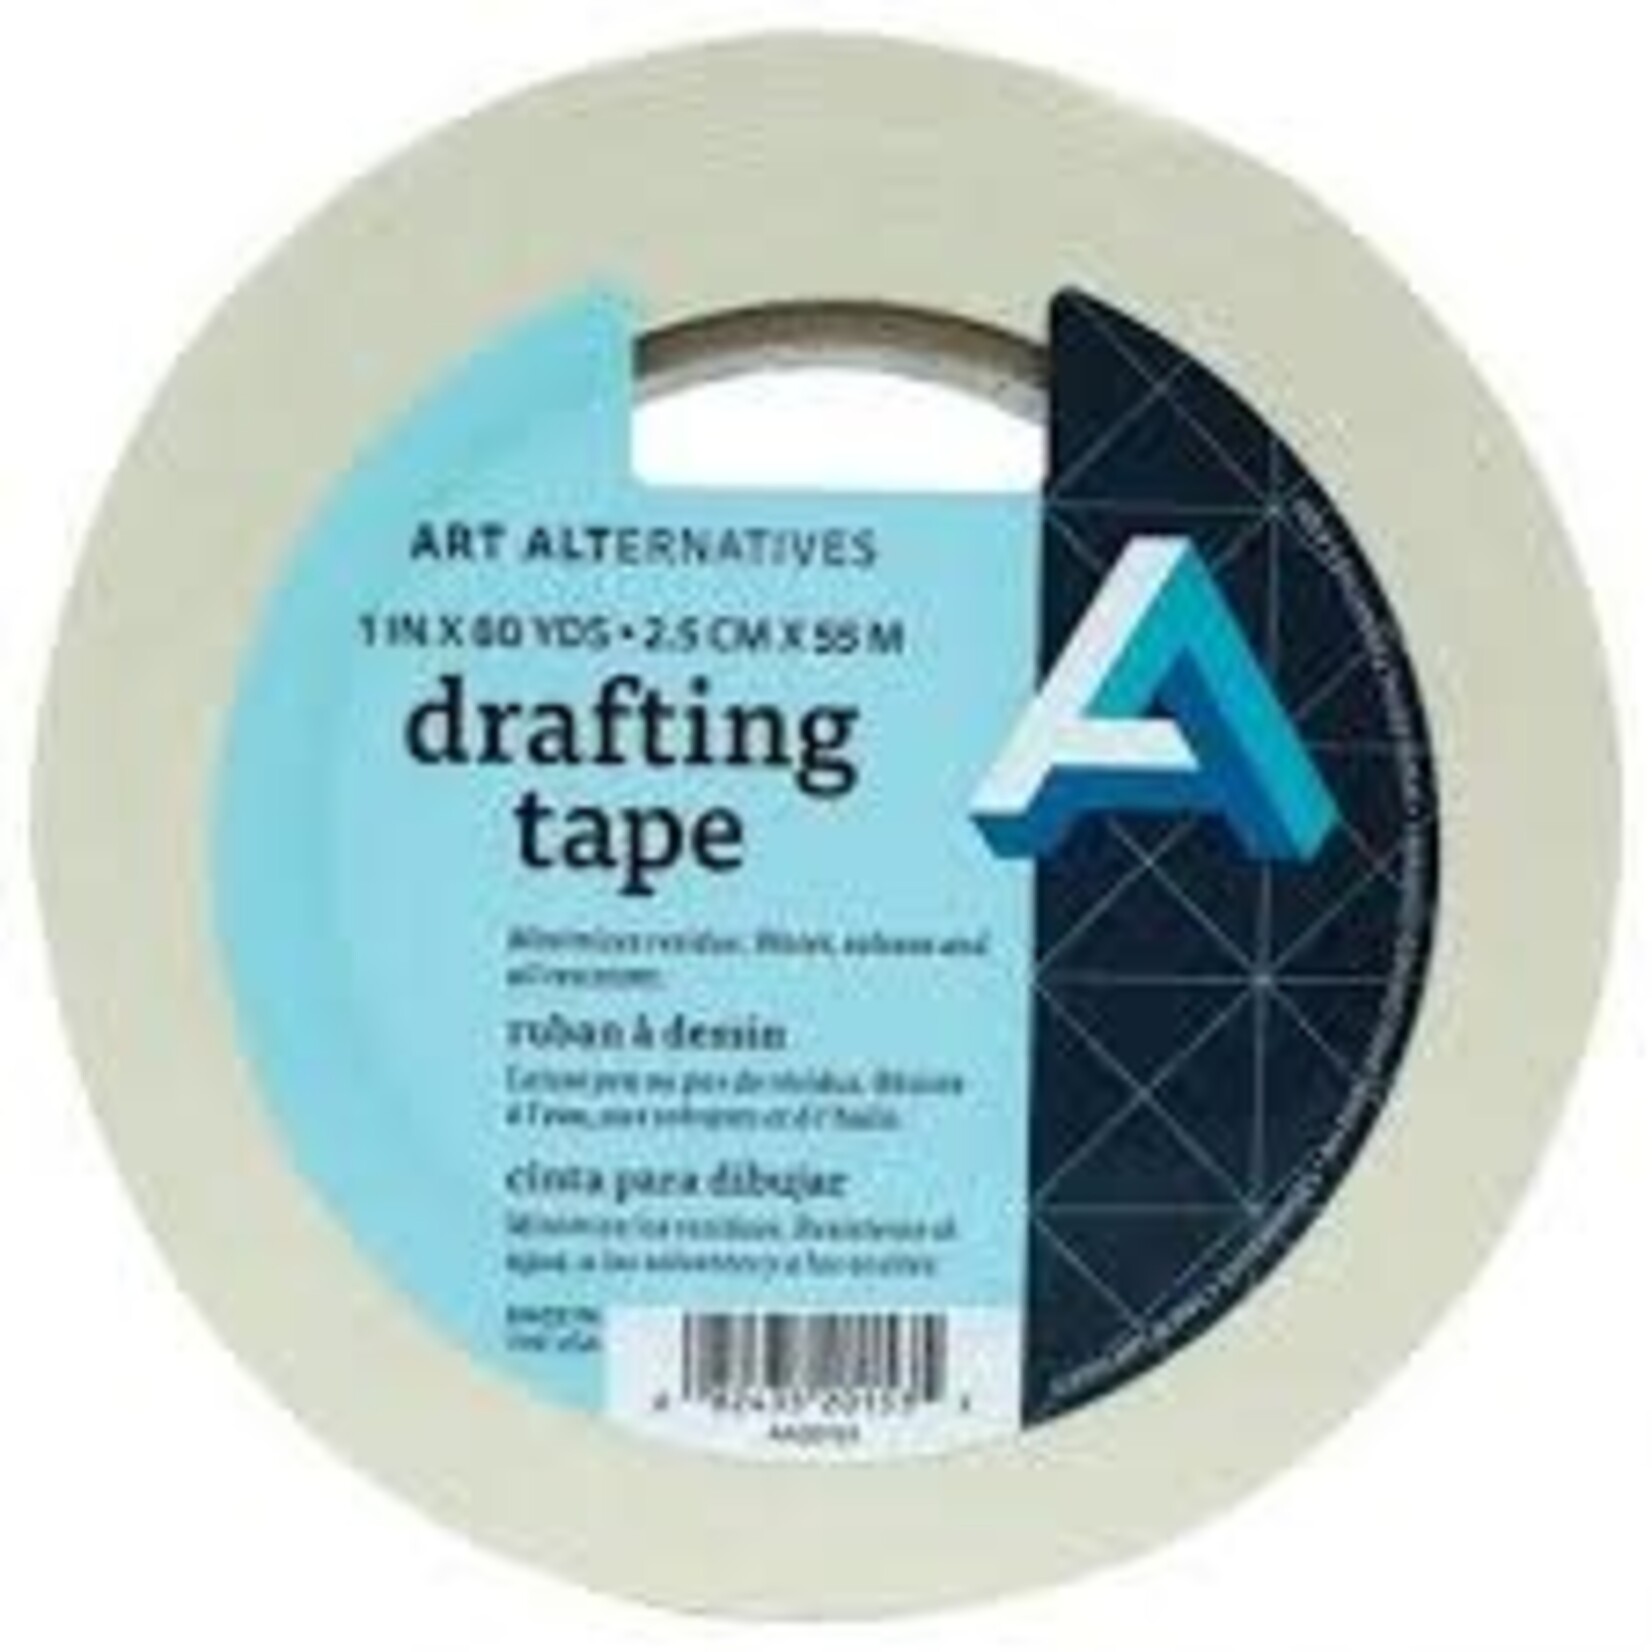 Art Alternatives Tape Drafting 1" x 60" yards